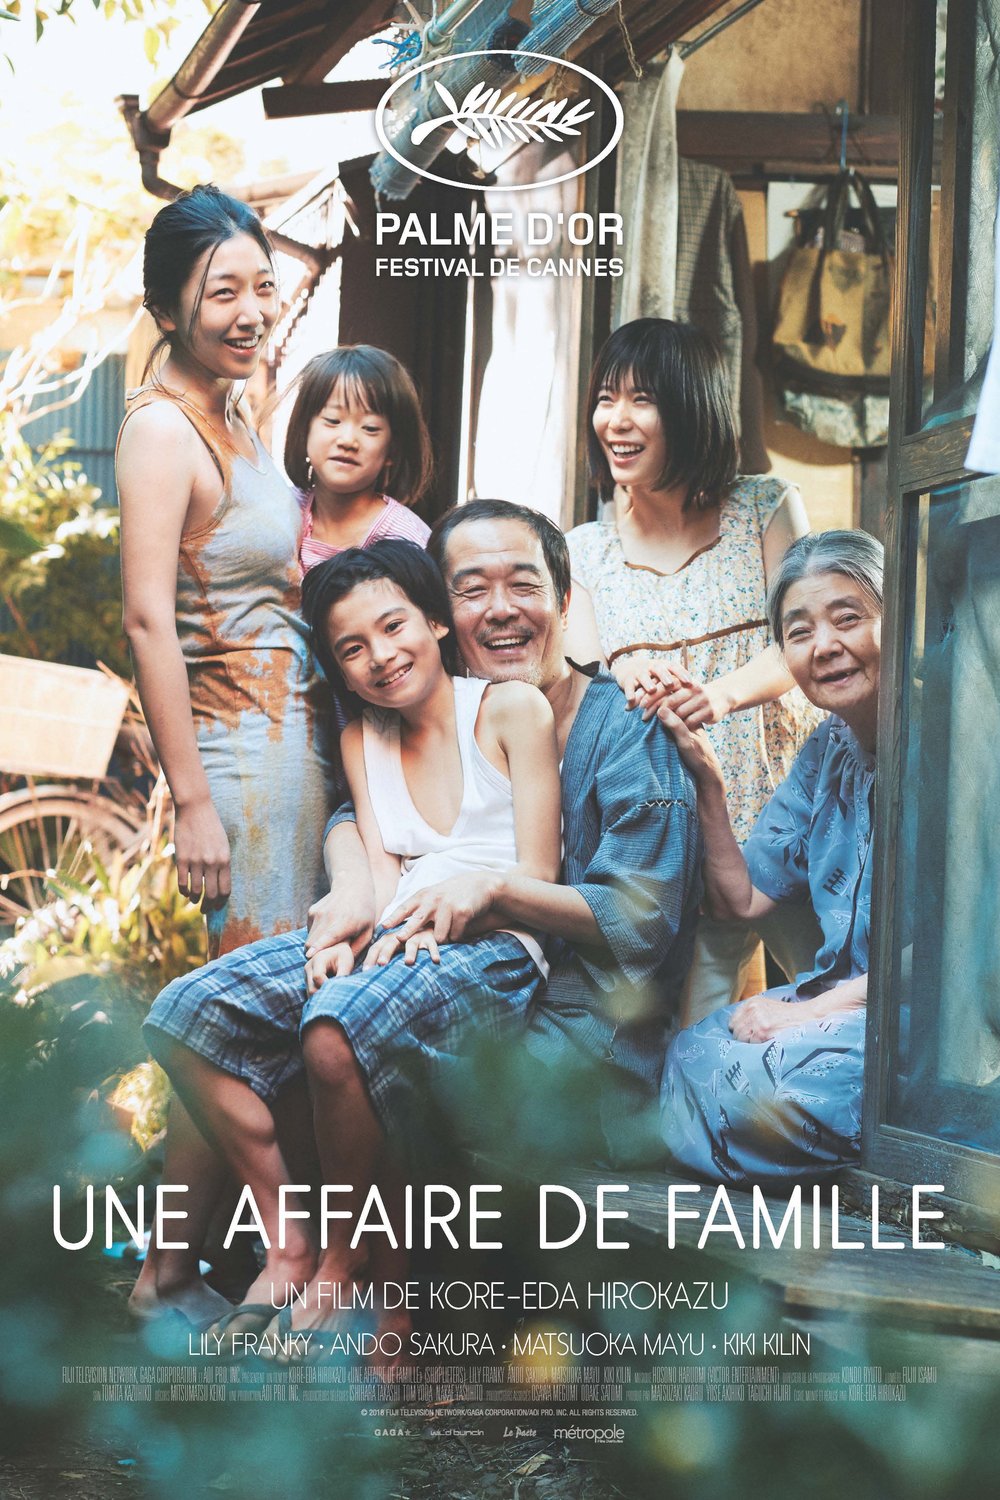 Poster of the movie Une affaire de famille